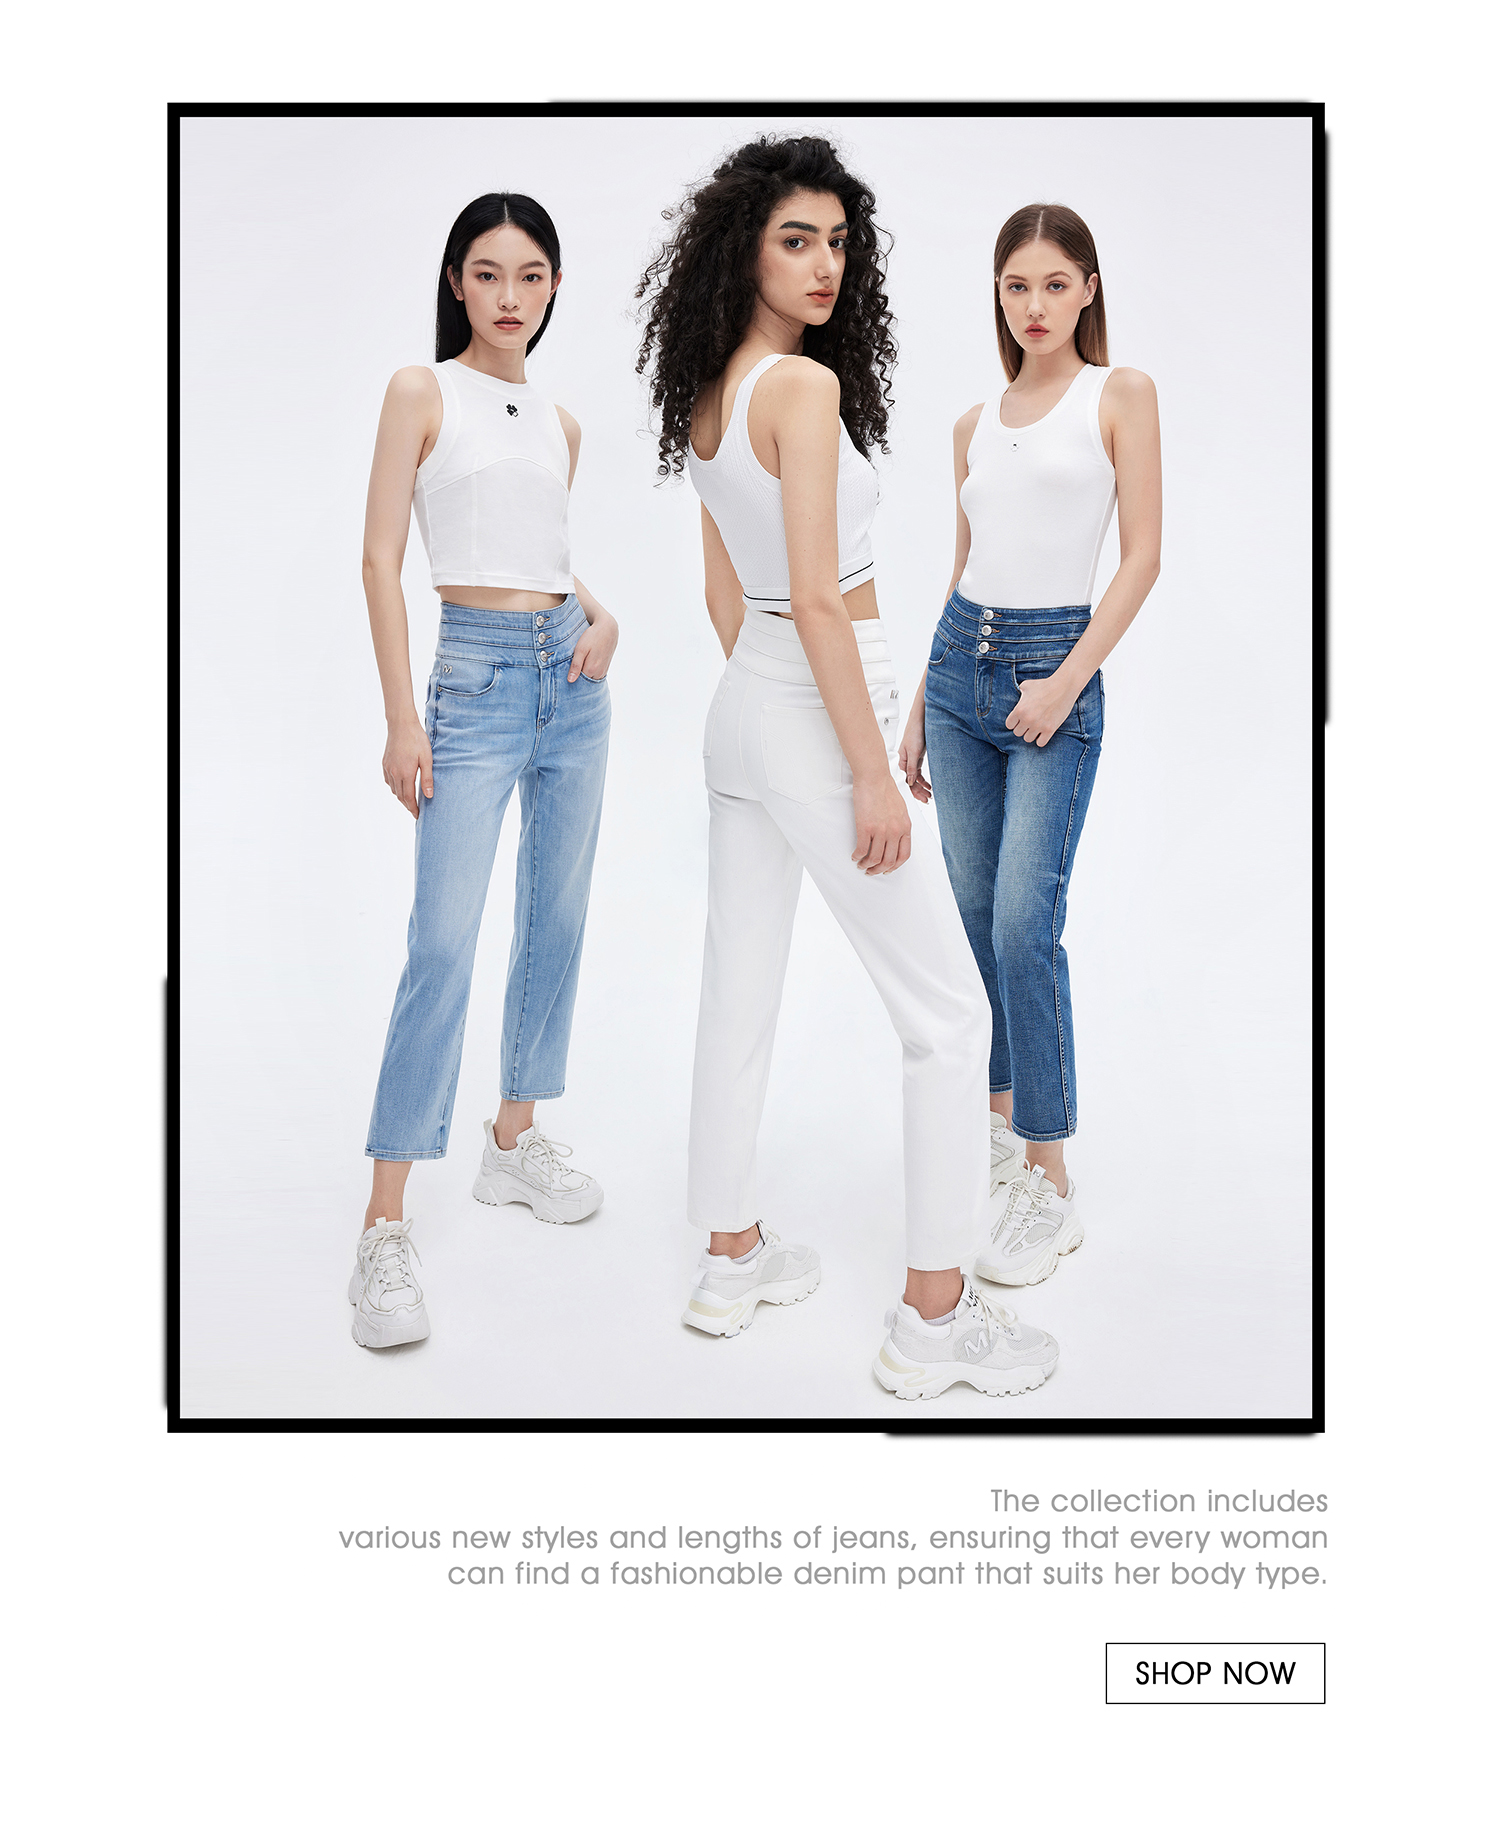 Topshop 'Meet Your New Jeans' Denim Campaign - THE JEANS BLOG